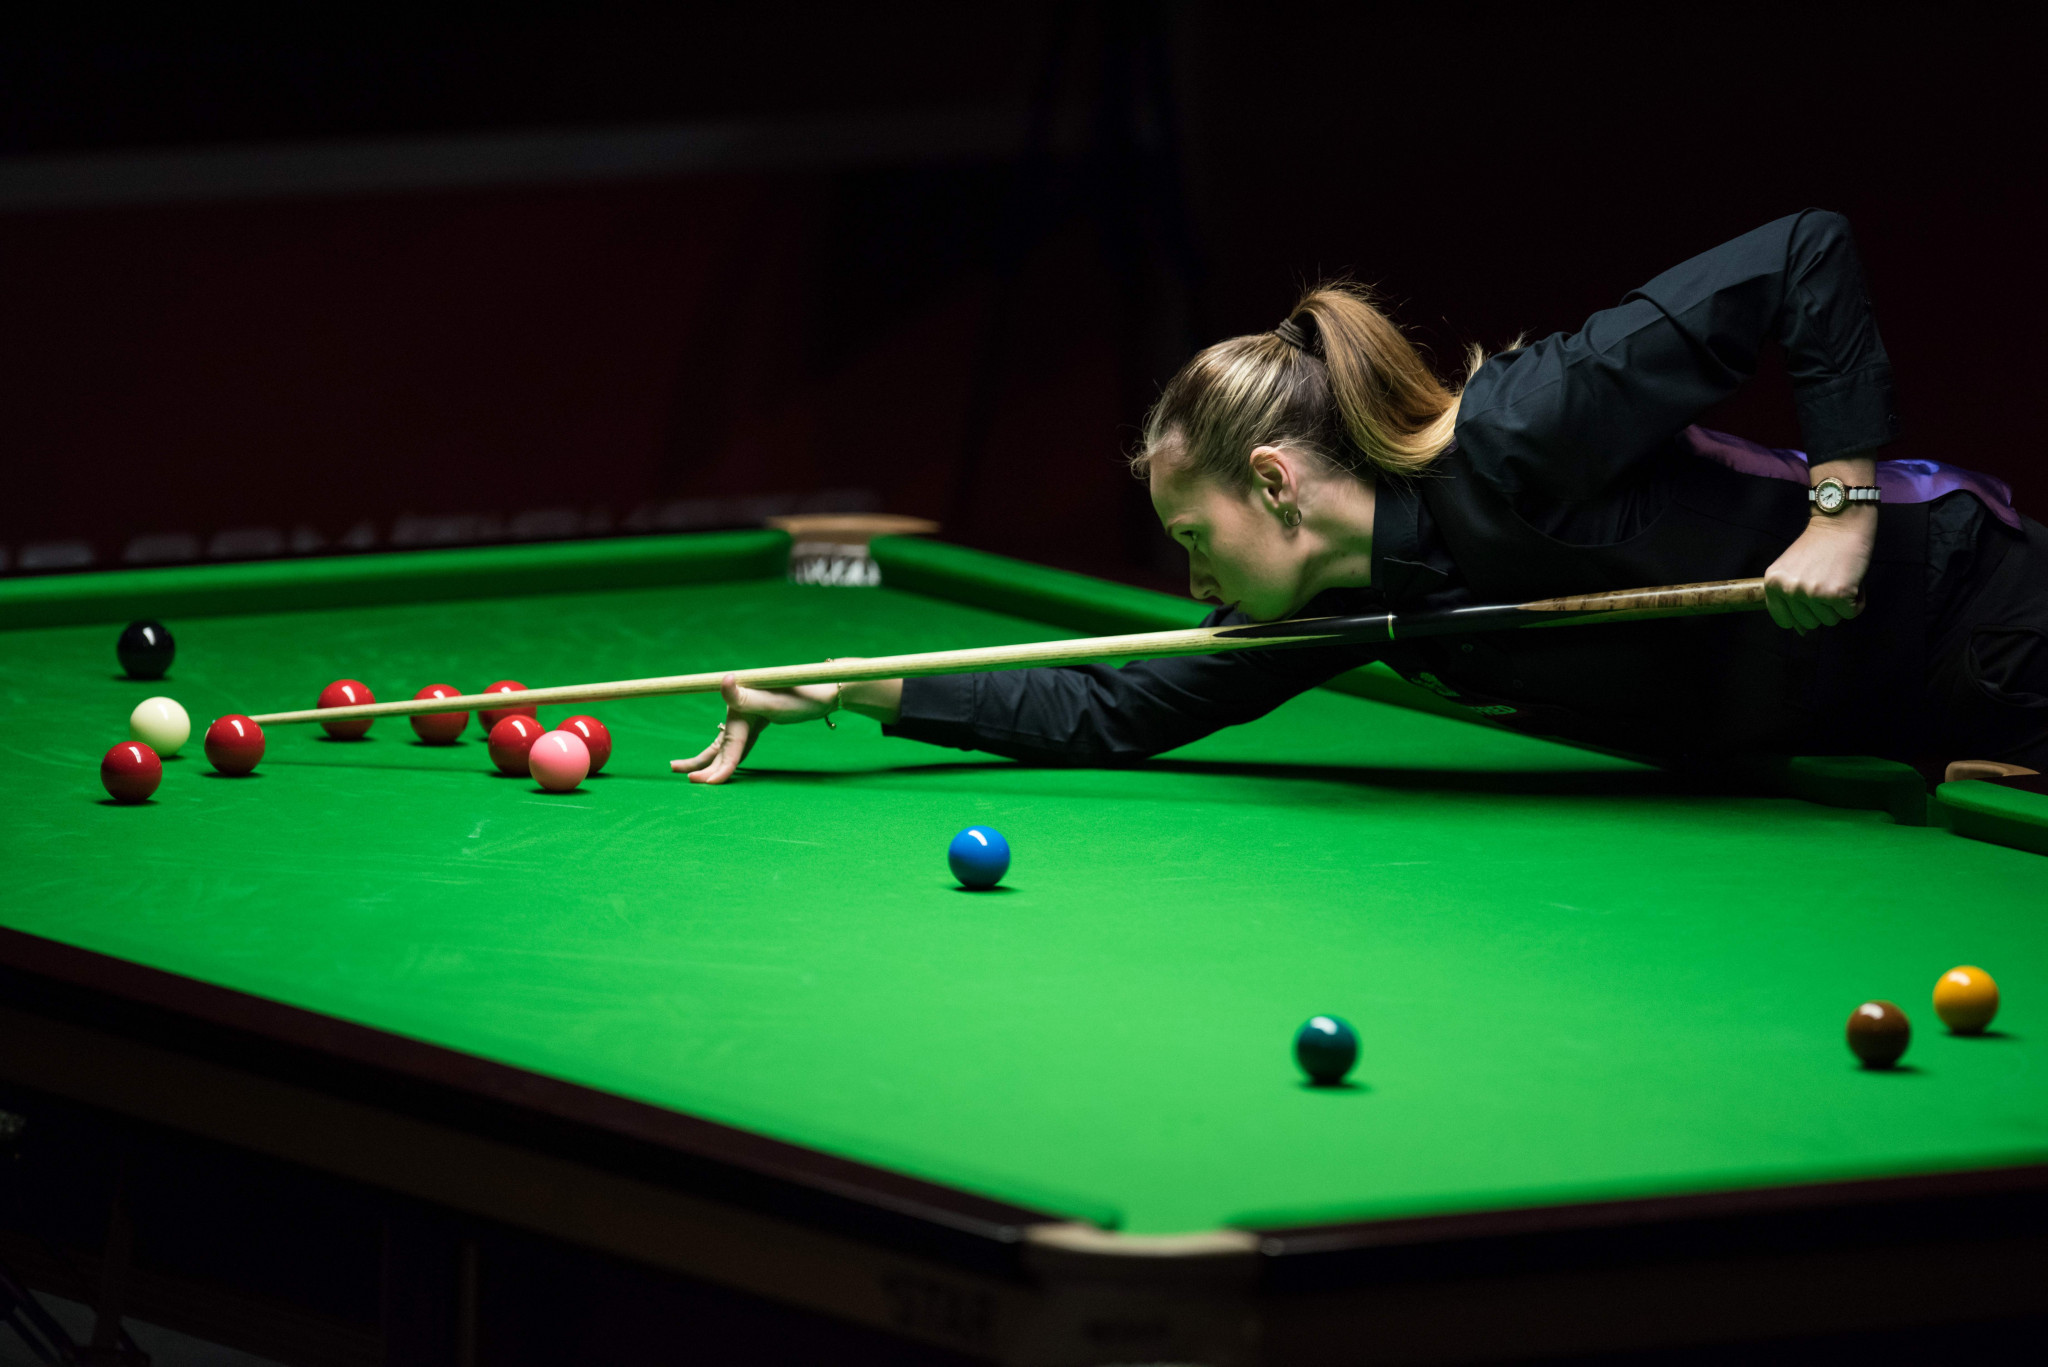 Defending champion Evans gets off to winning start at Women’s World Snooker Championship